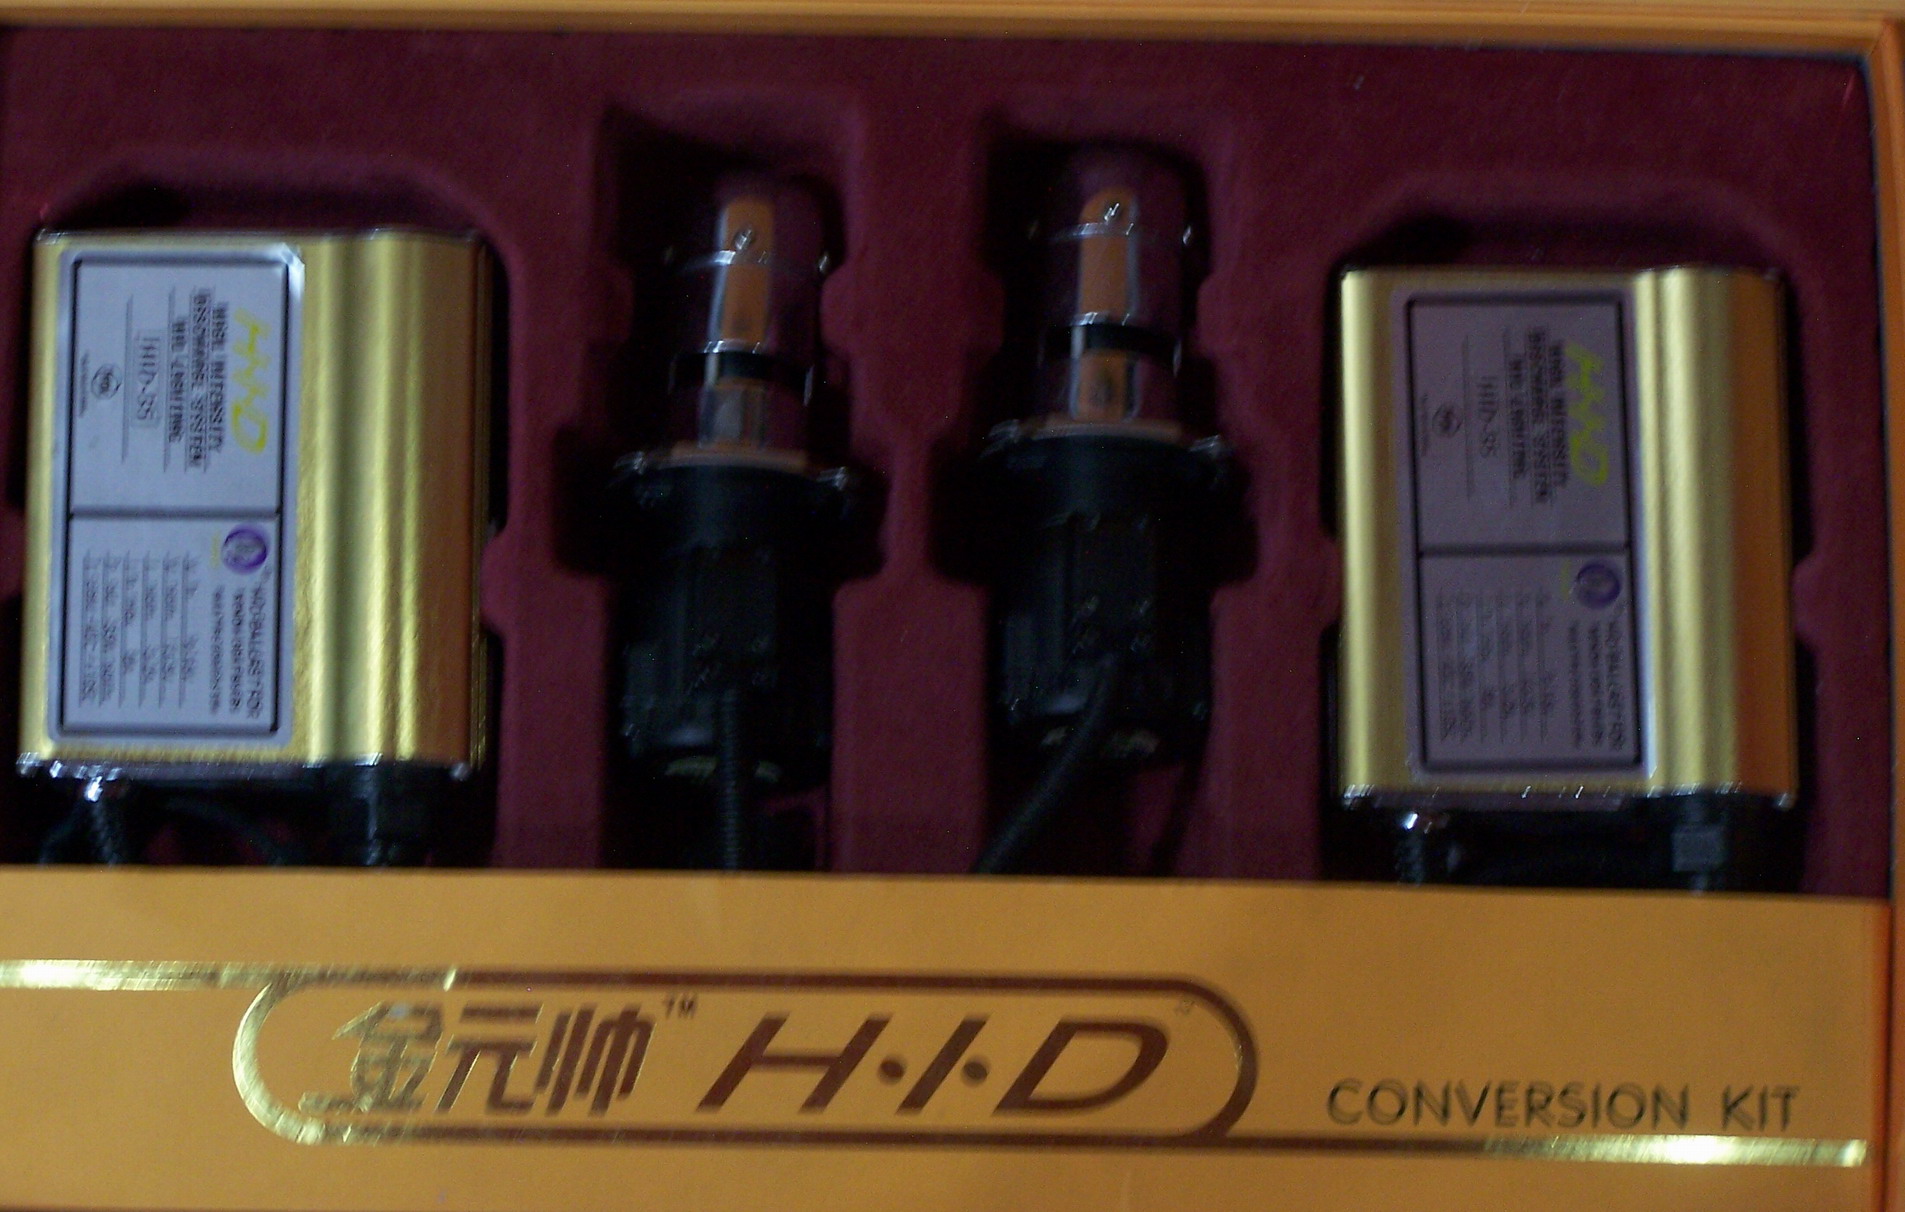 Hid series conversion kit